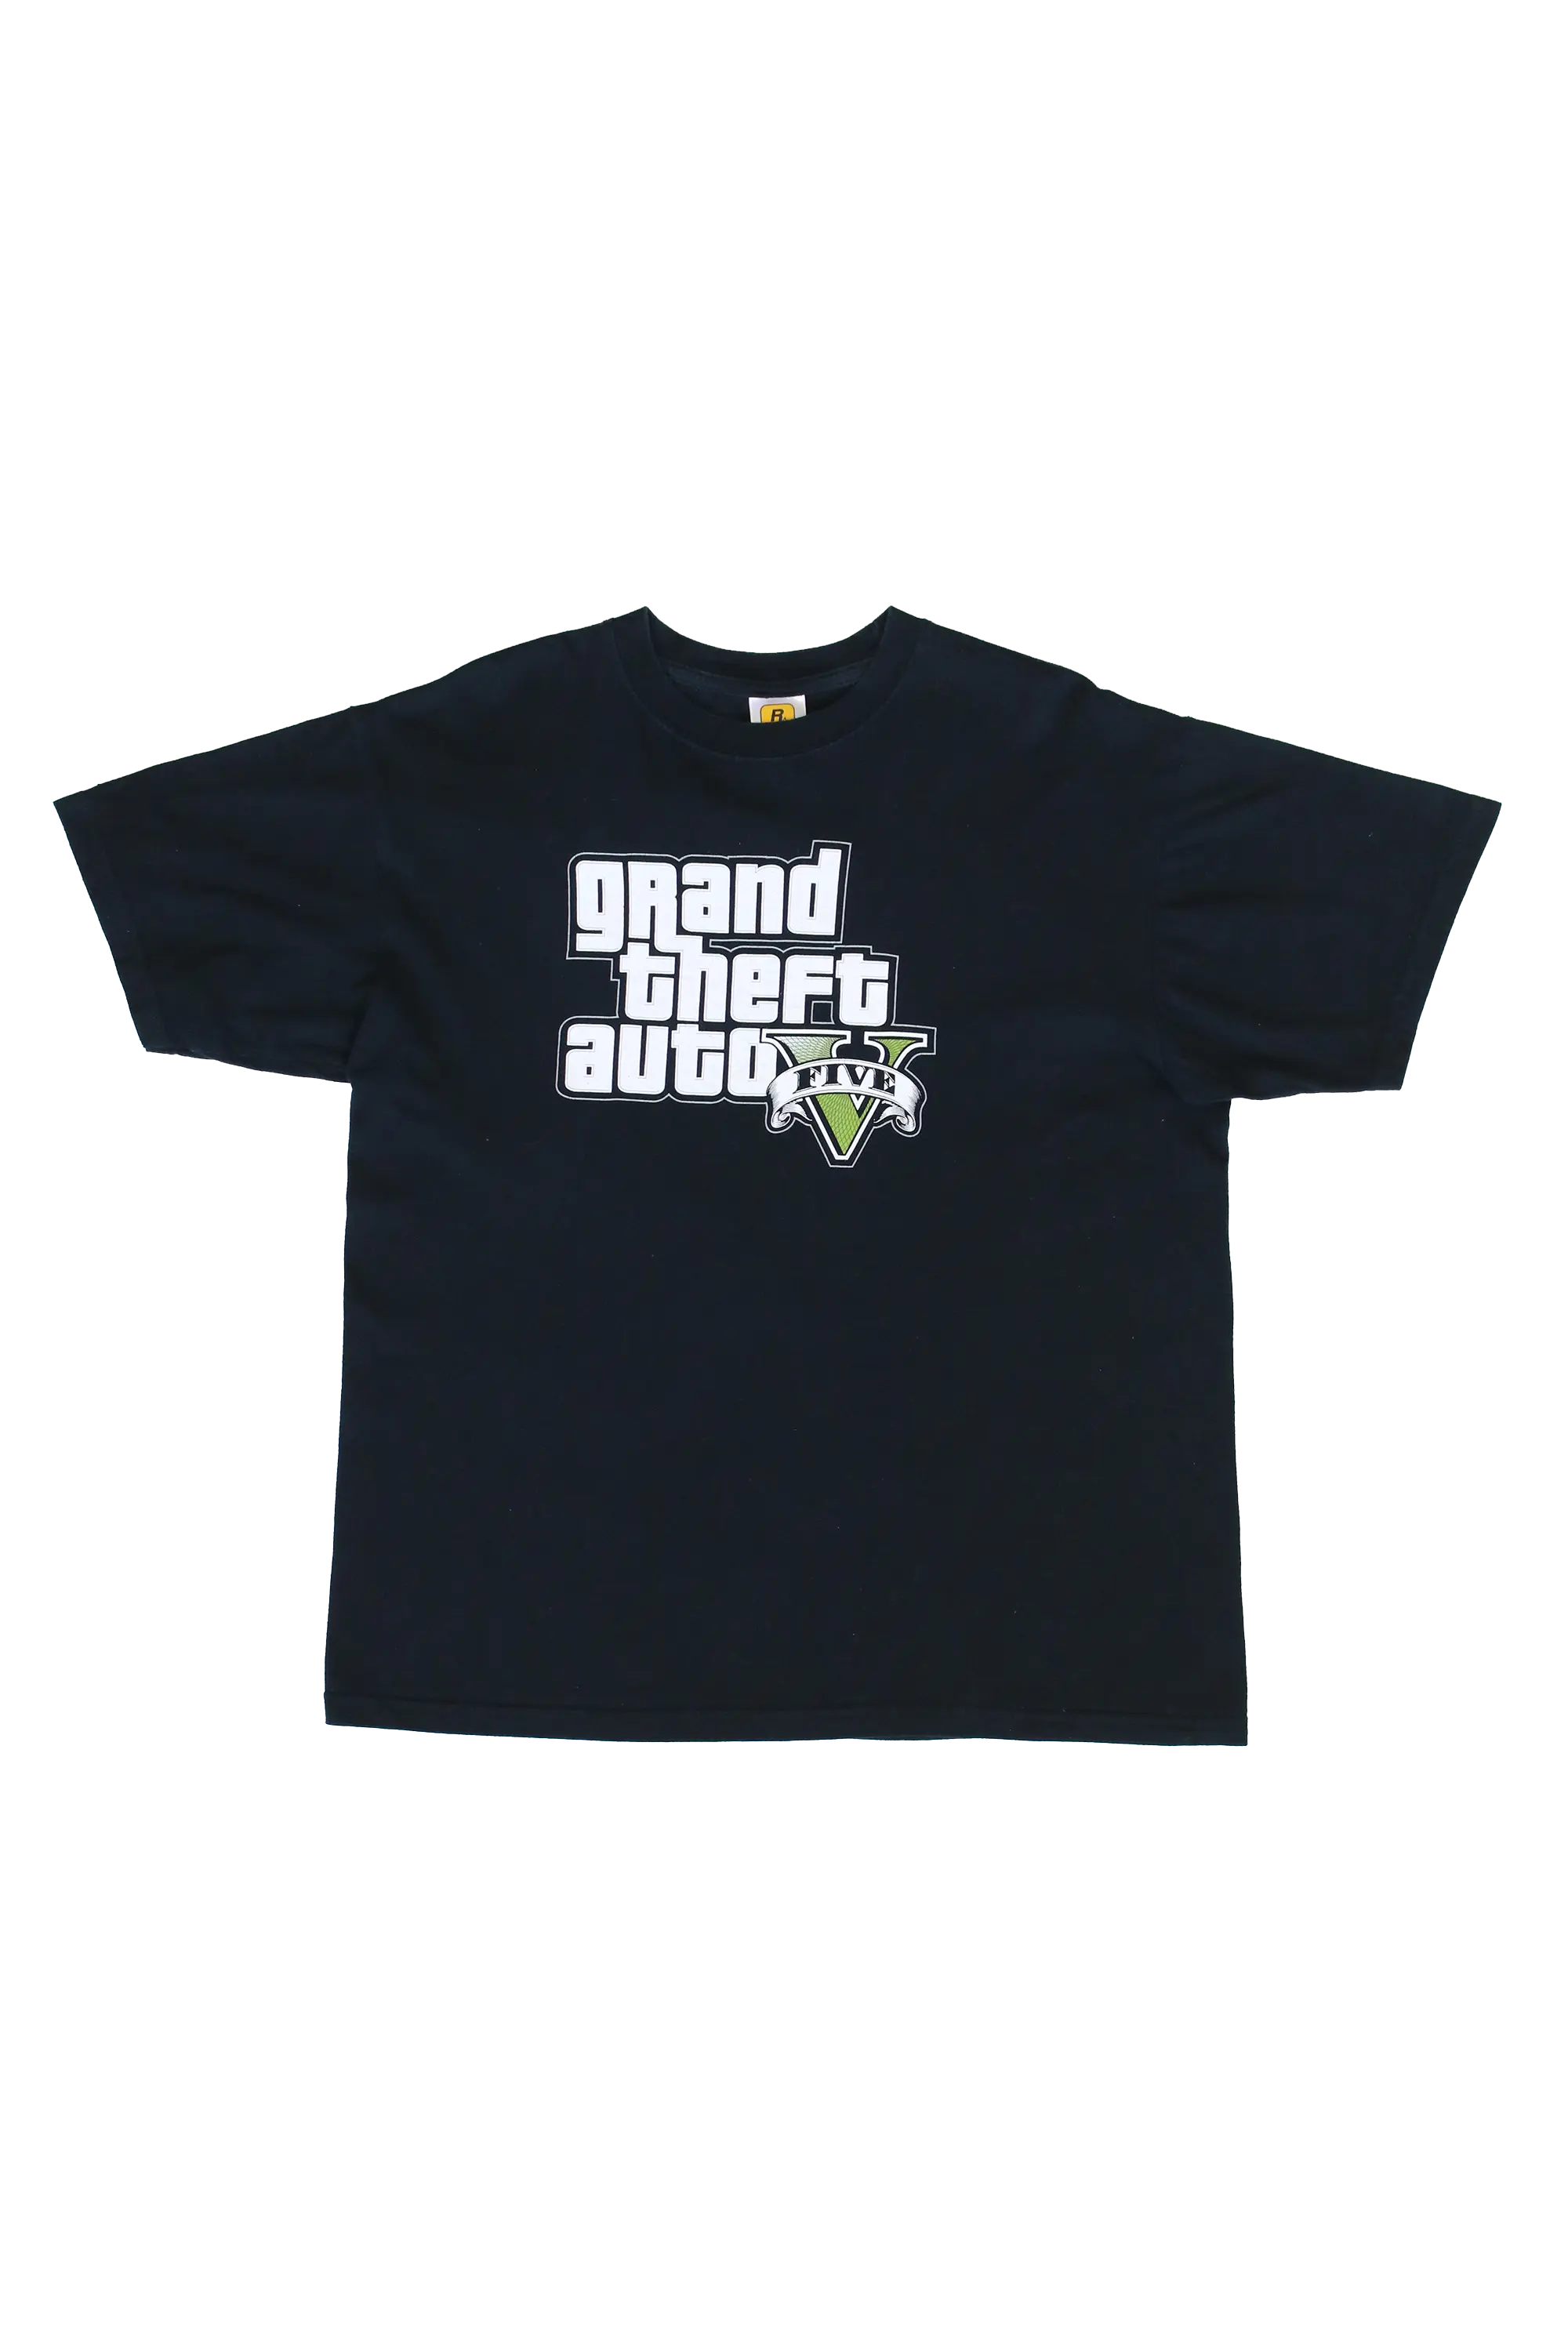 GTA 5 Promo T-Shirt